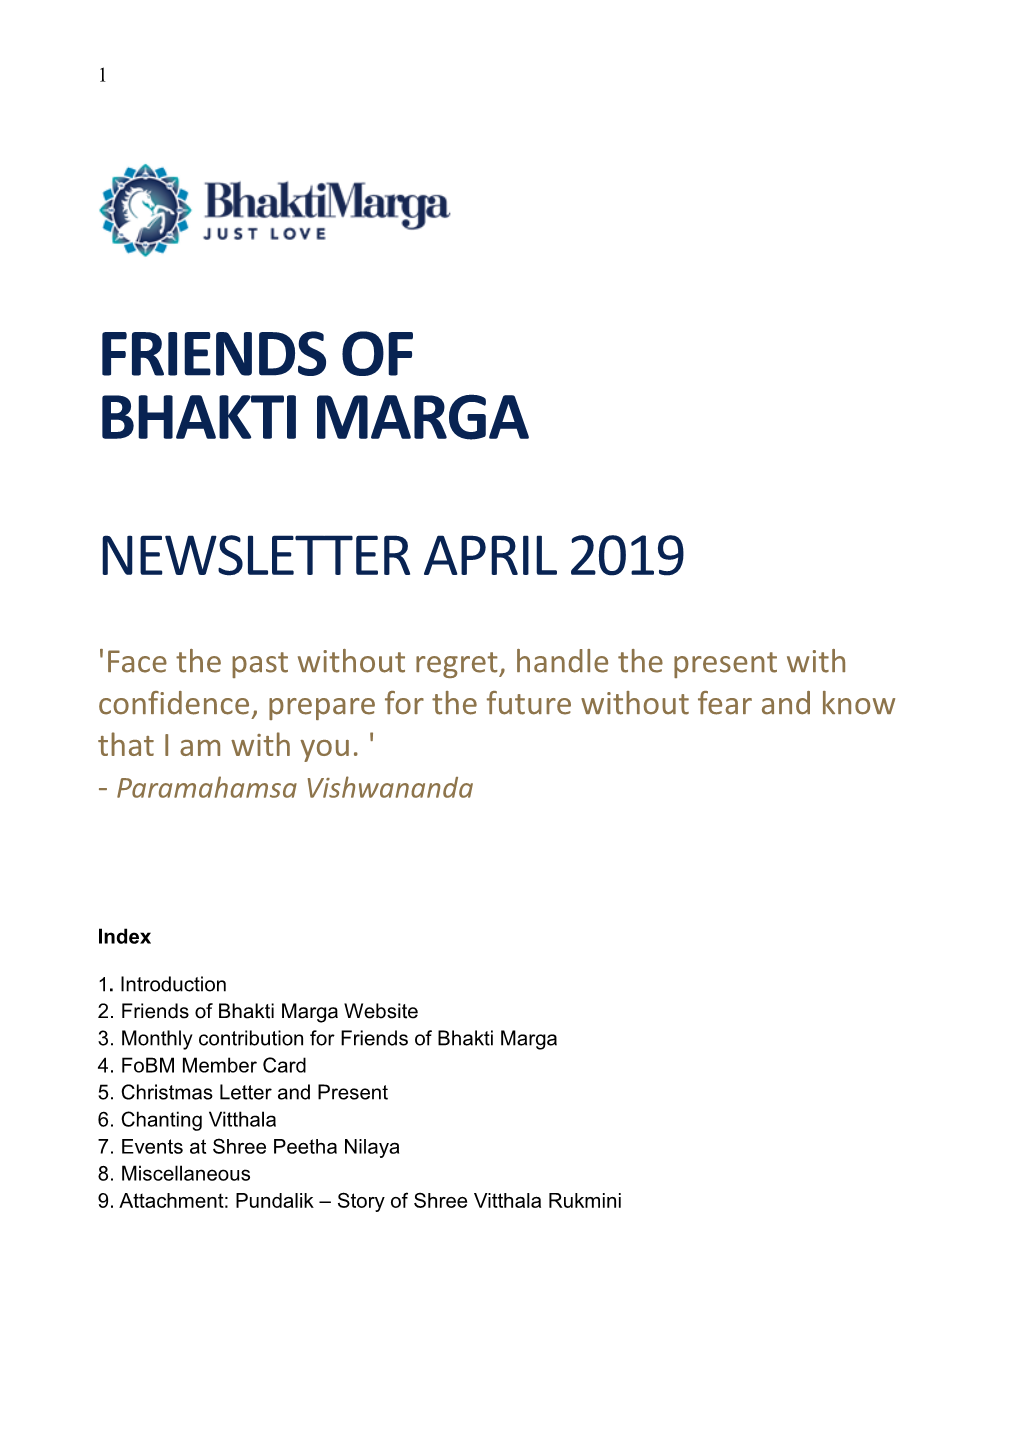 Friends of Bhakti Marga